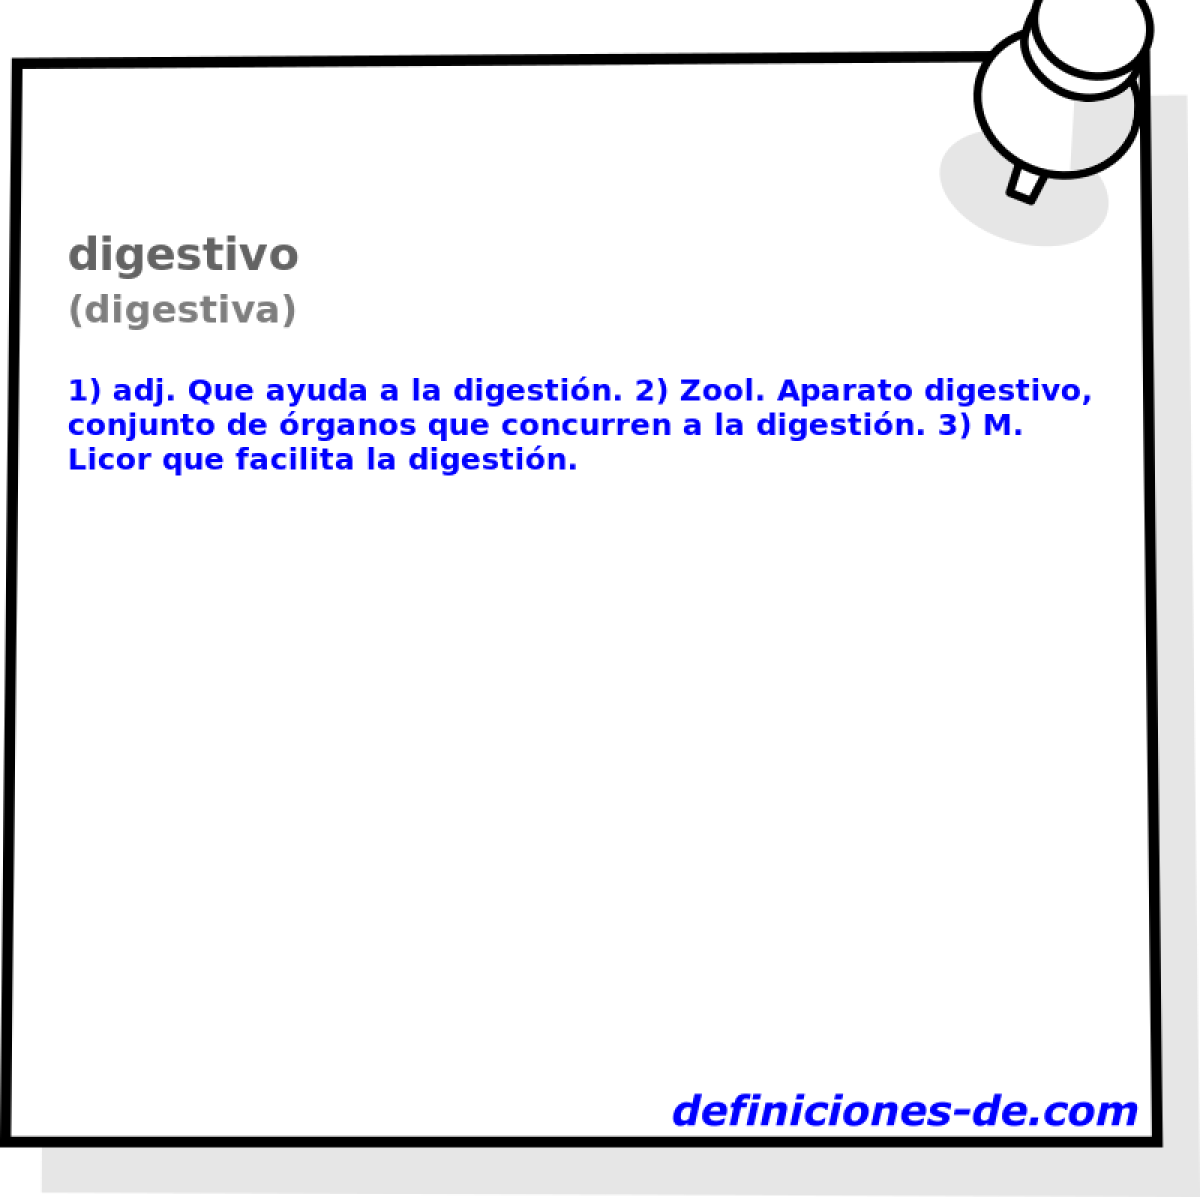 digestivo (digestiva)